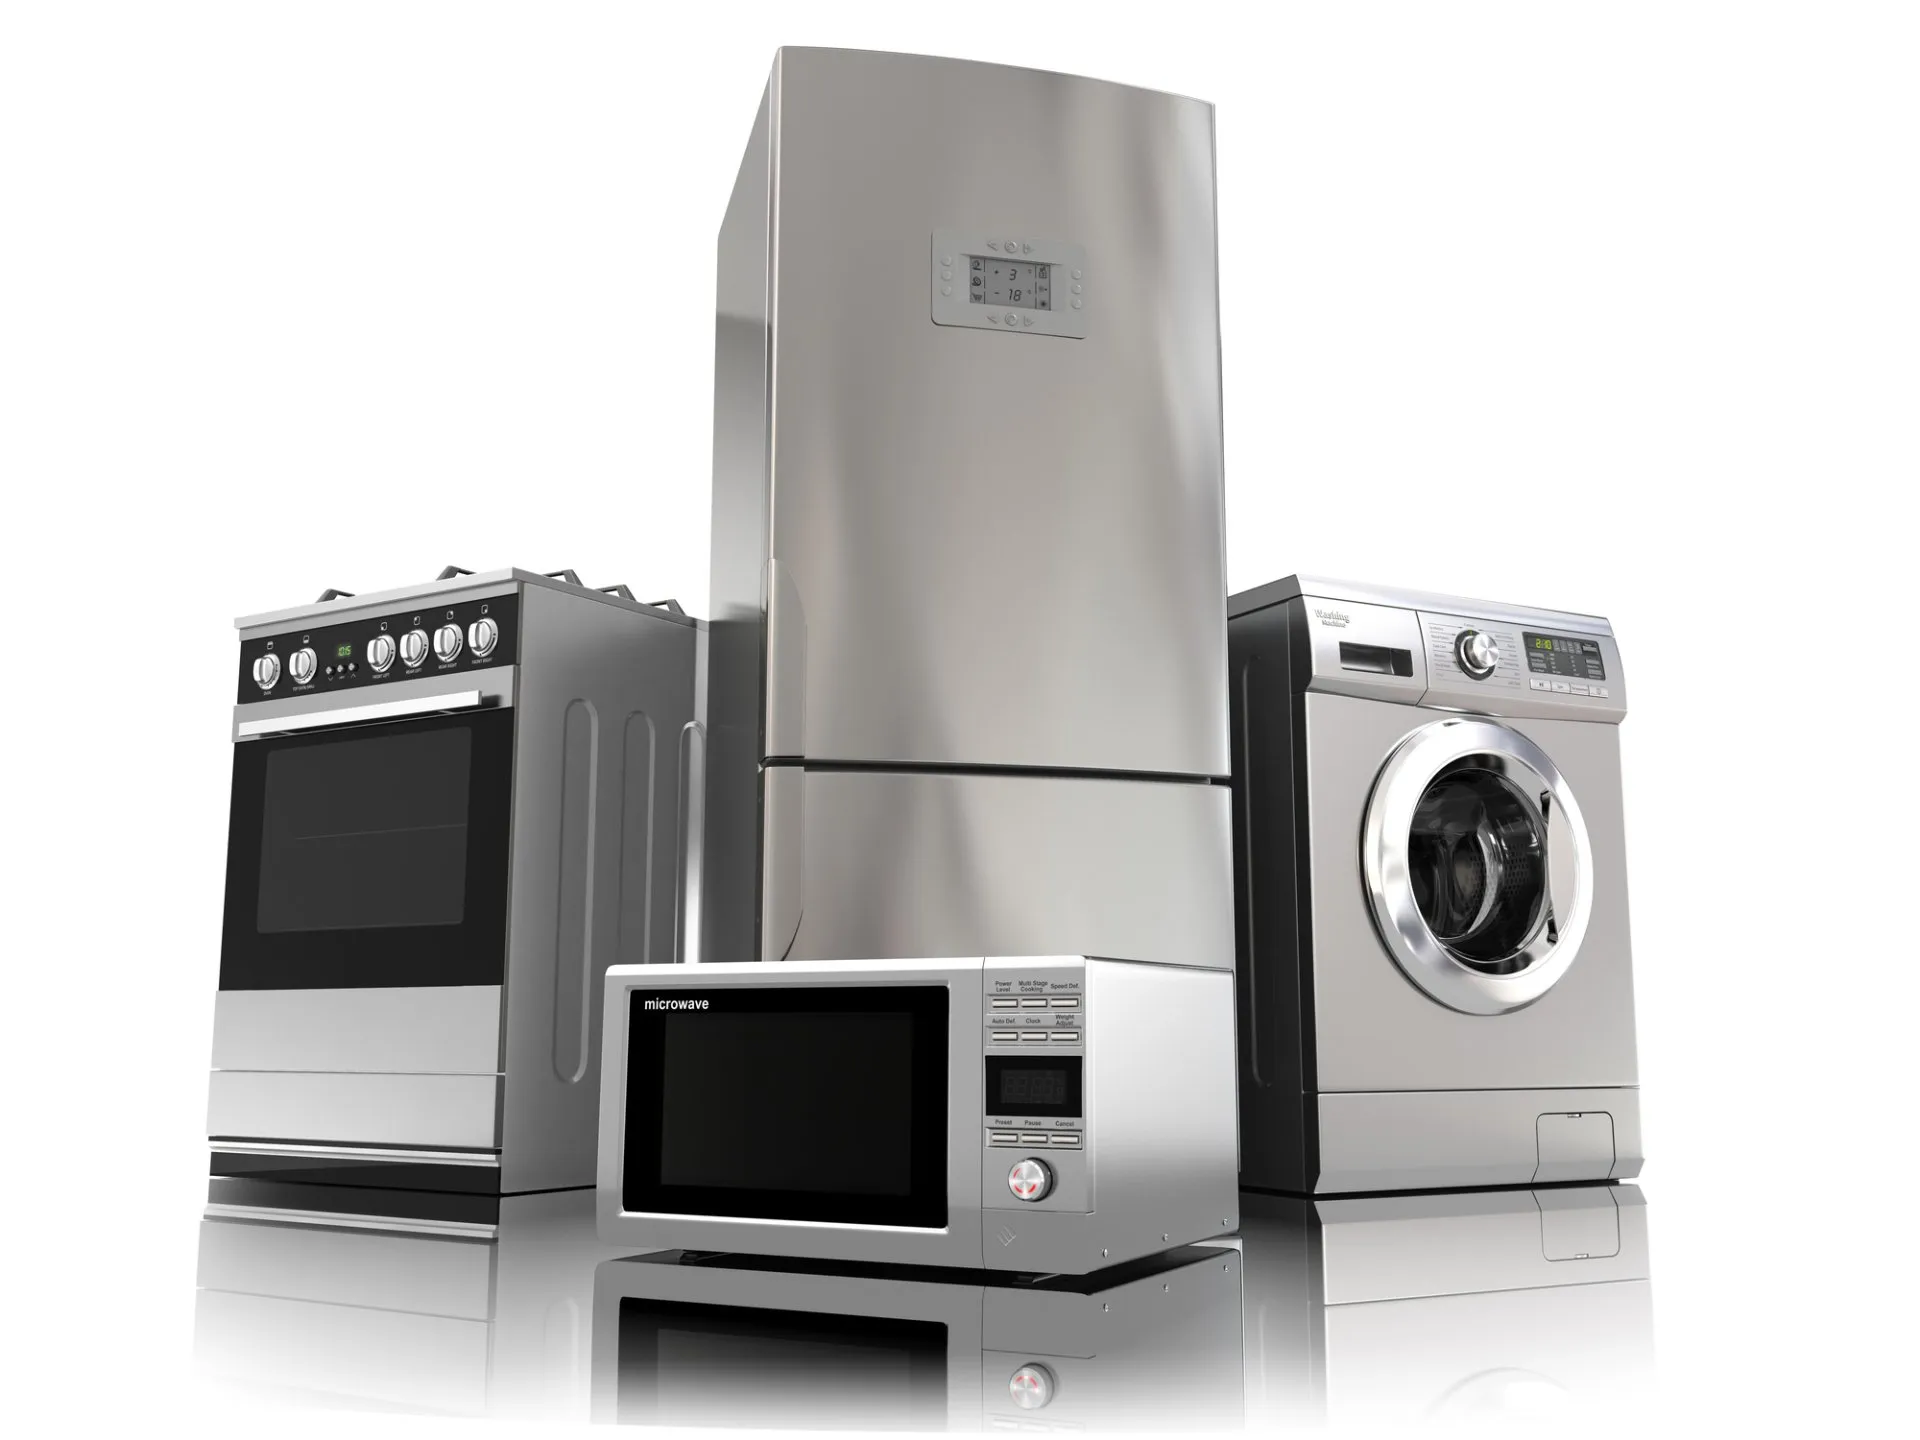 Appliance Rentals in Orem, UT